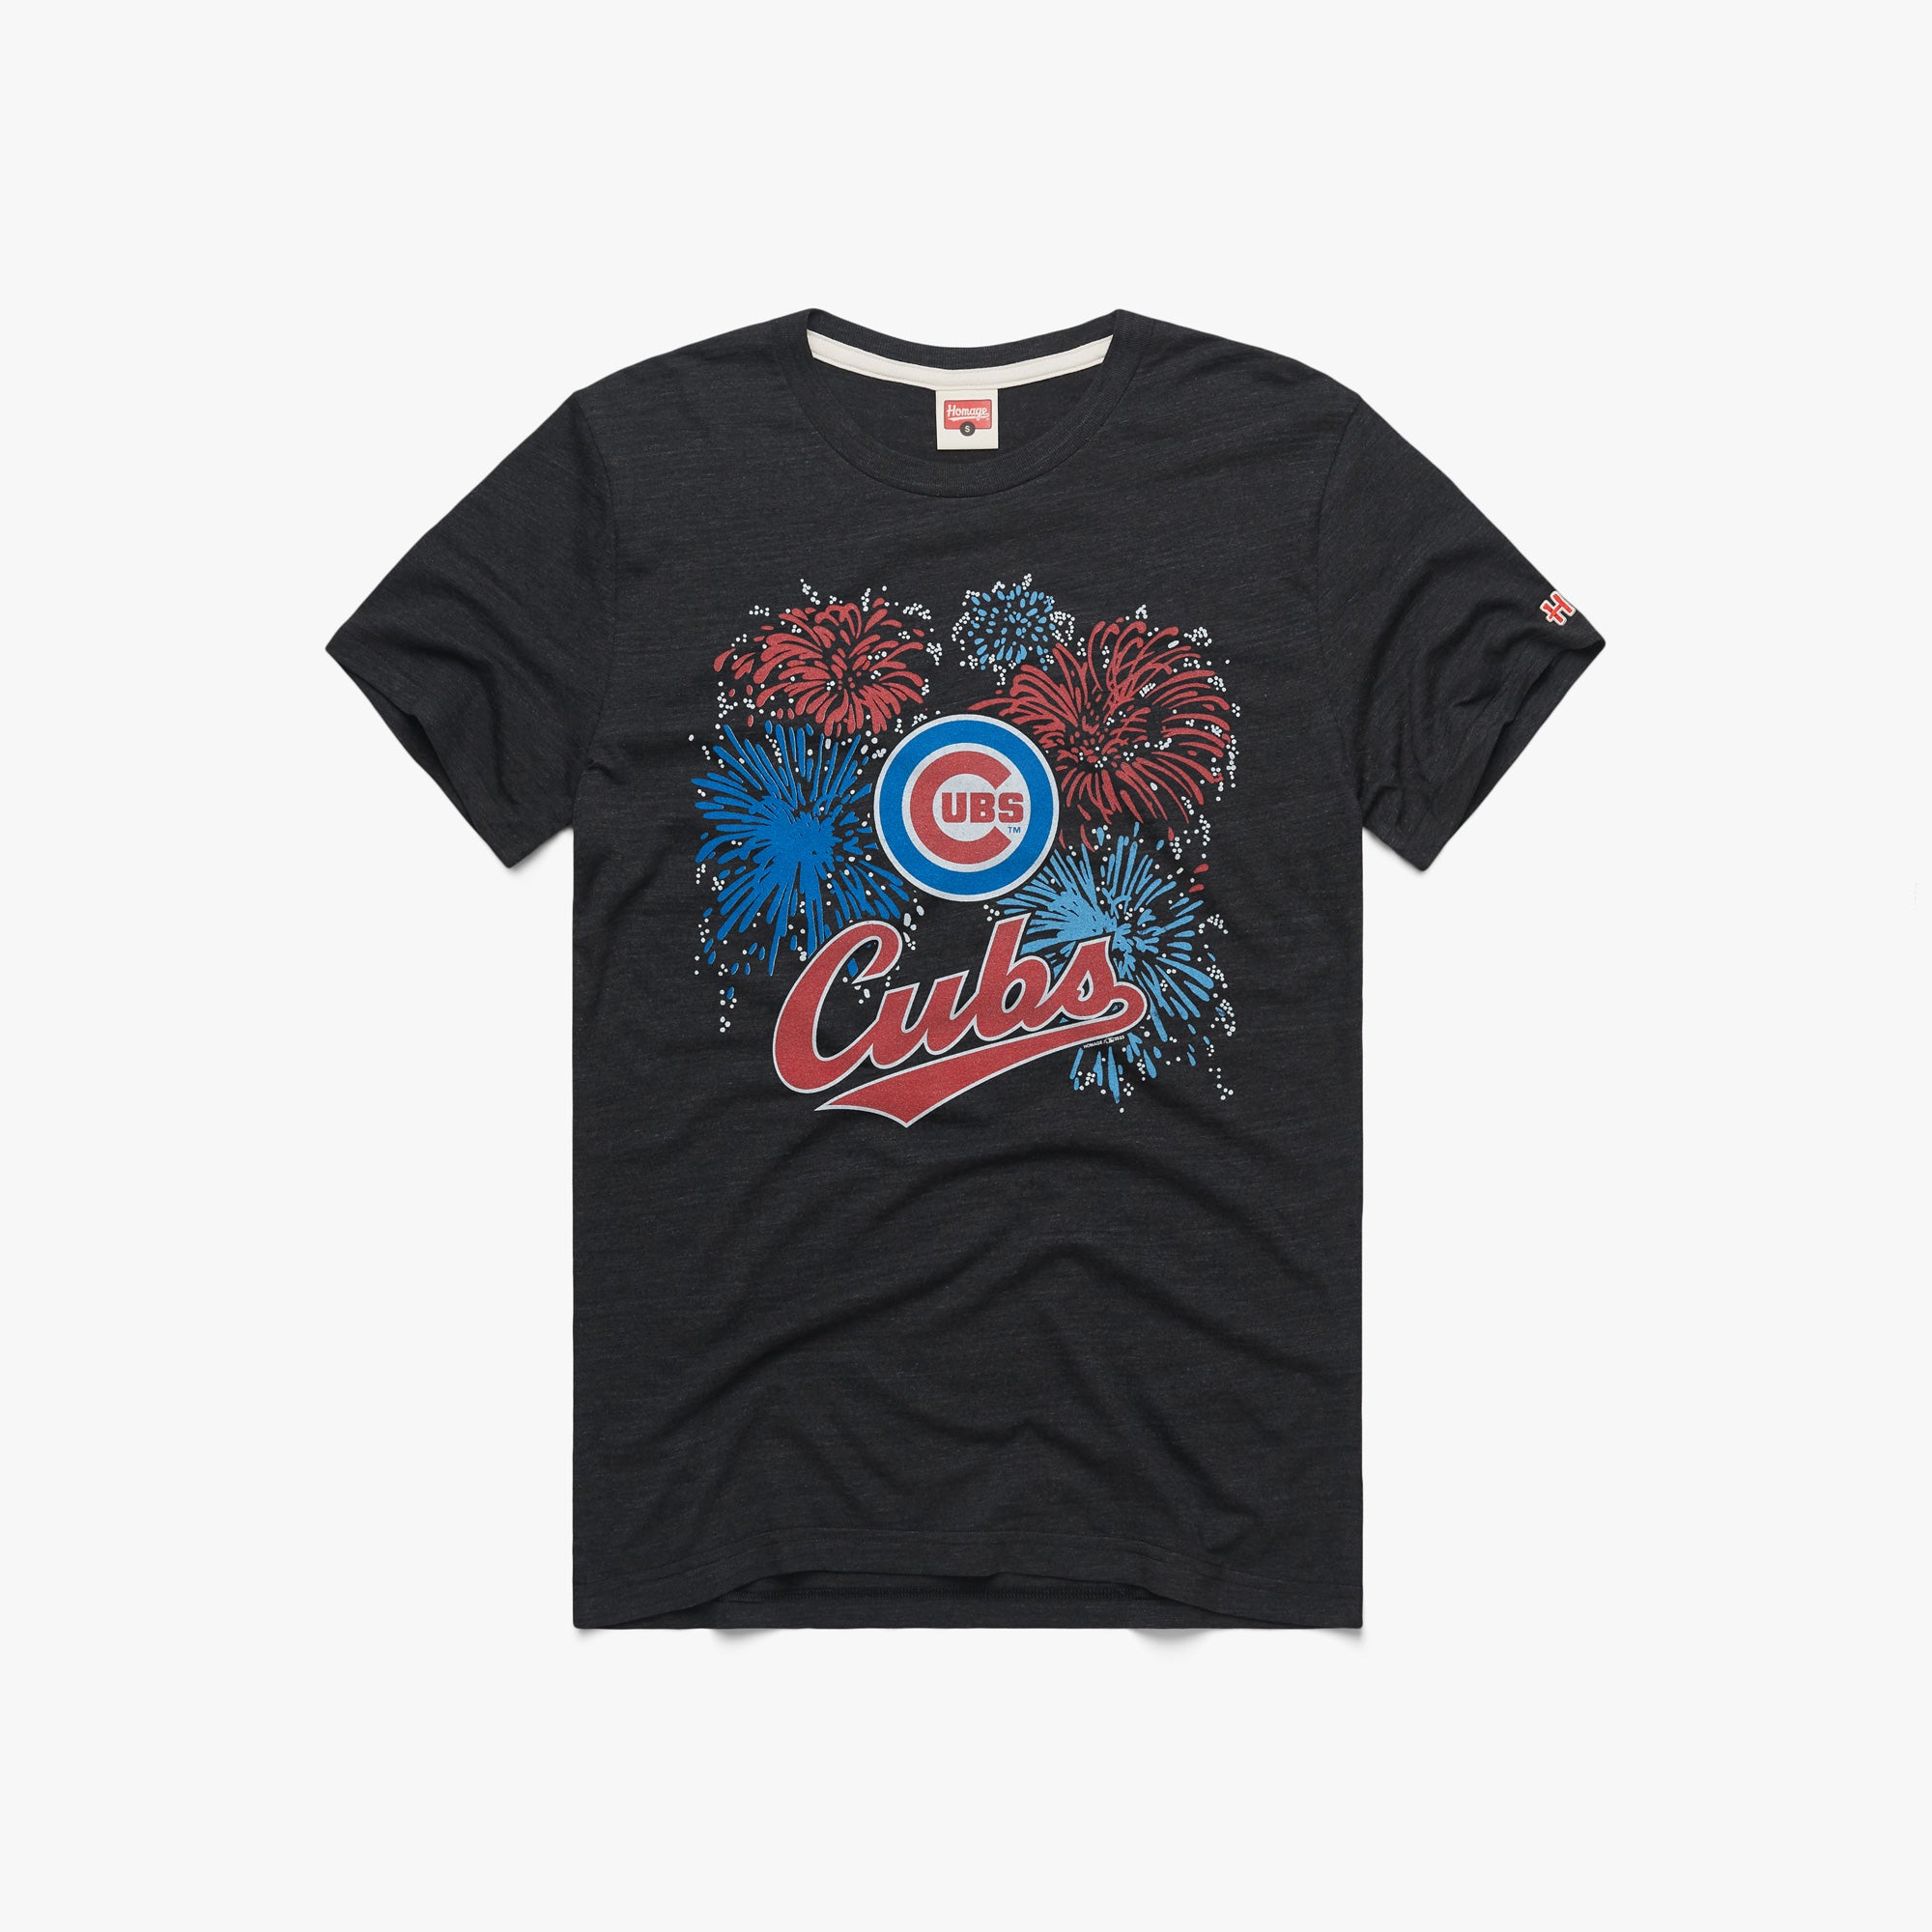 Vintage Chicago Cubs Sweatshirt, Chicago Baseball Shirt, Chi